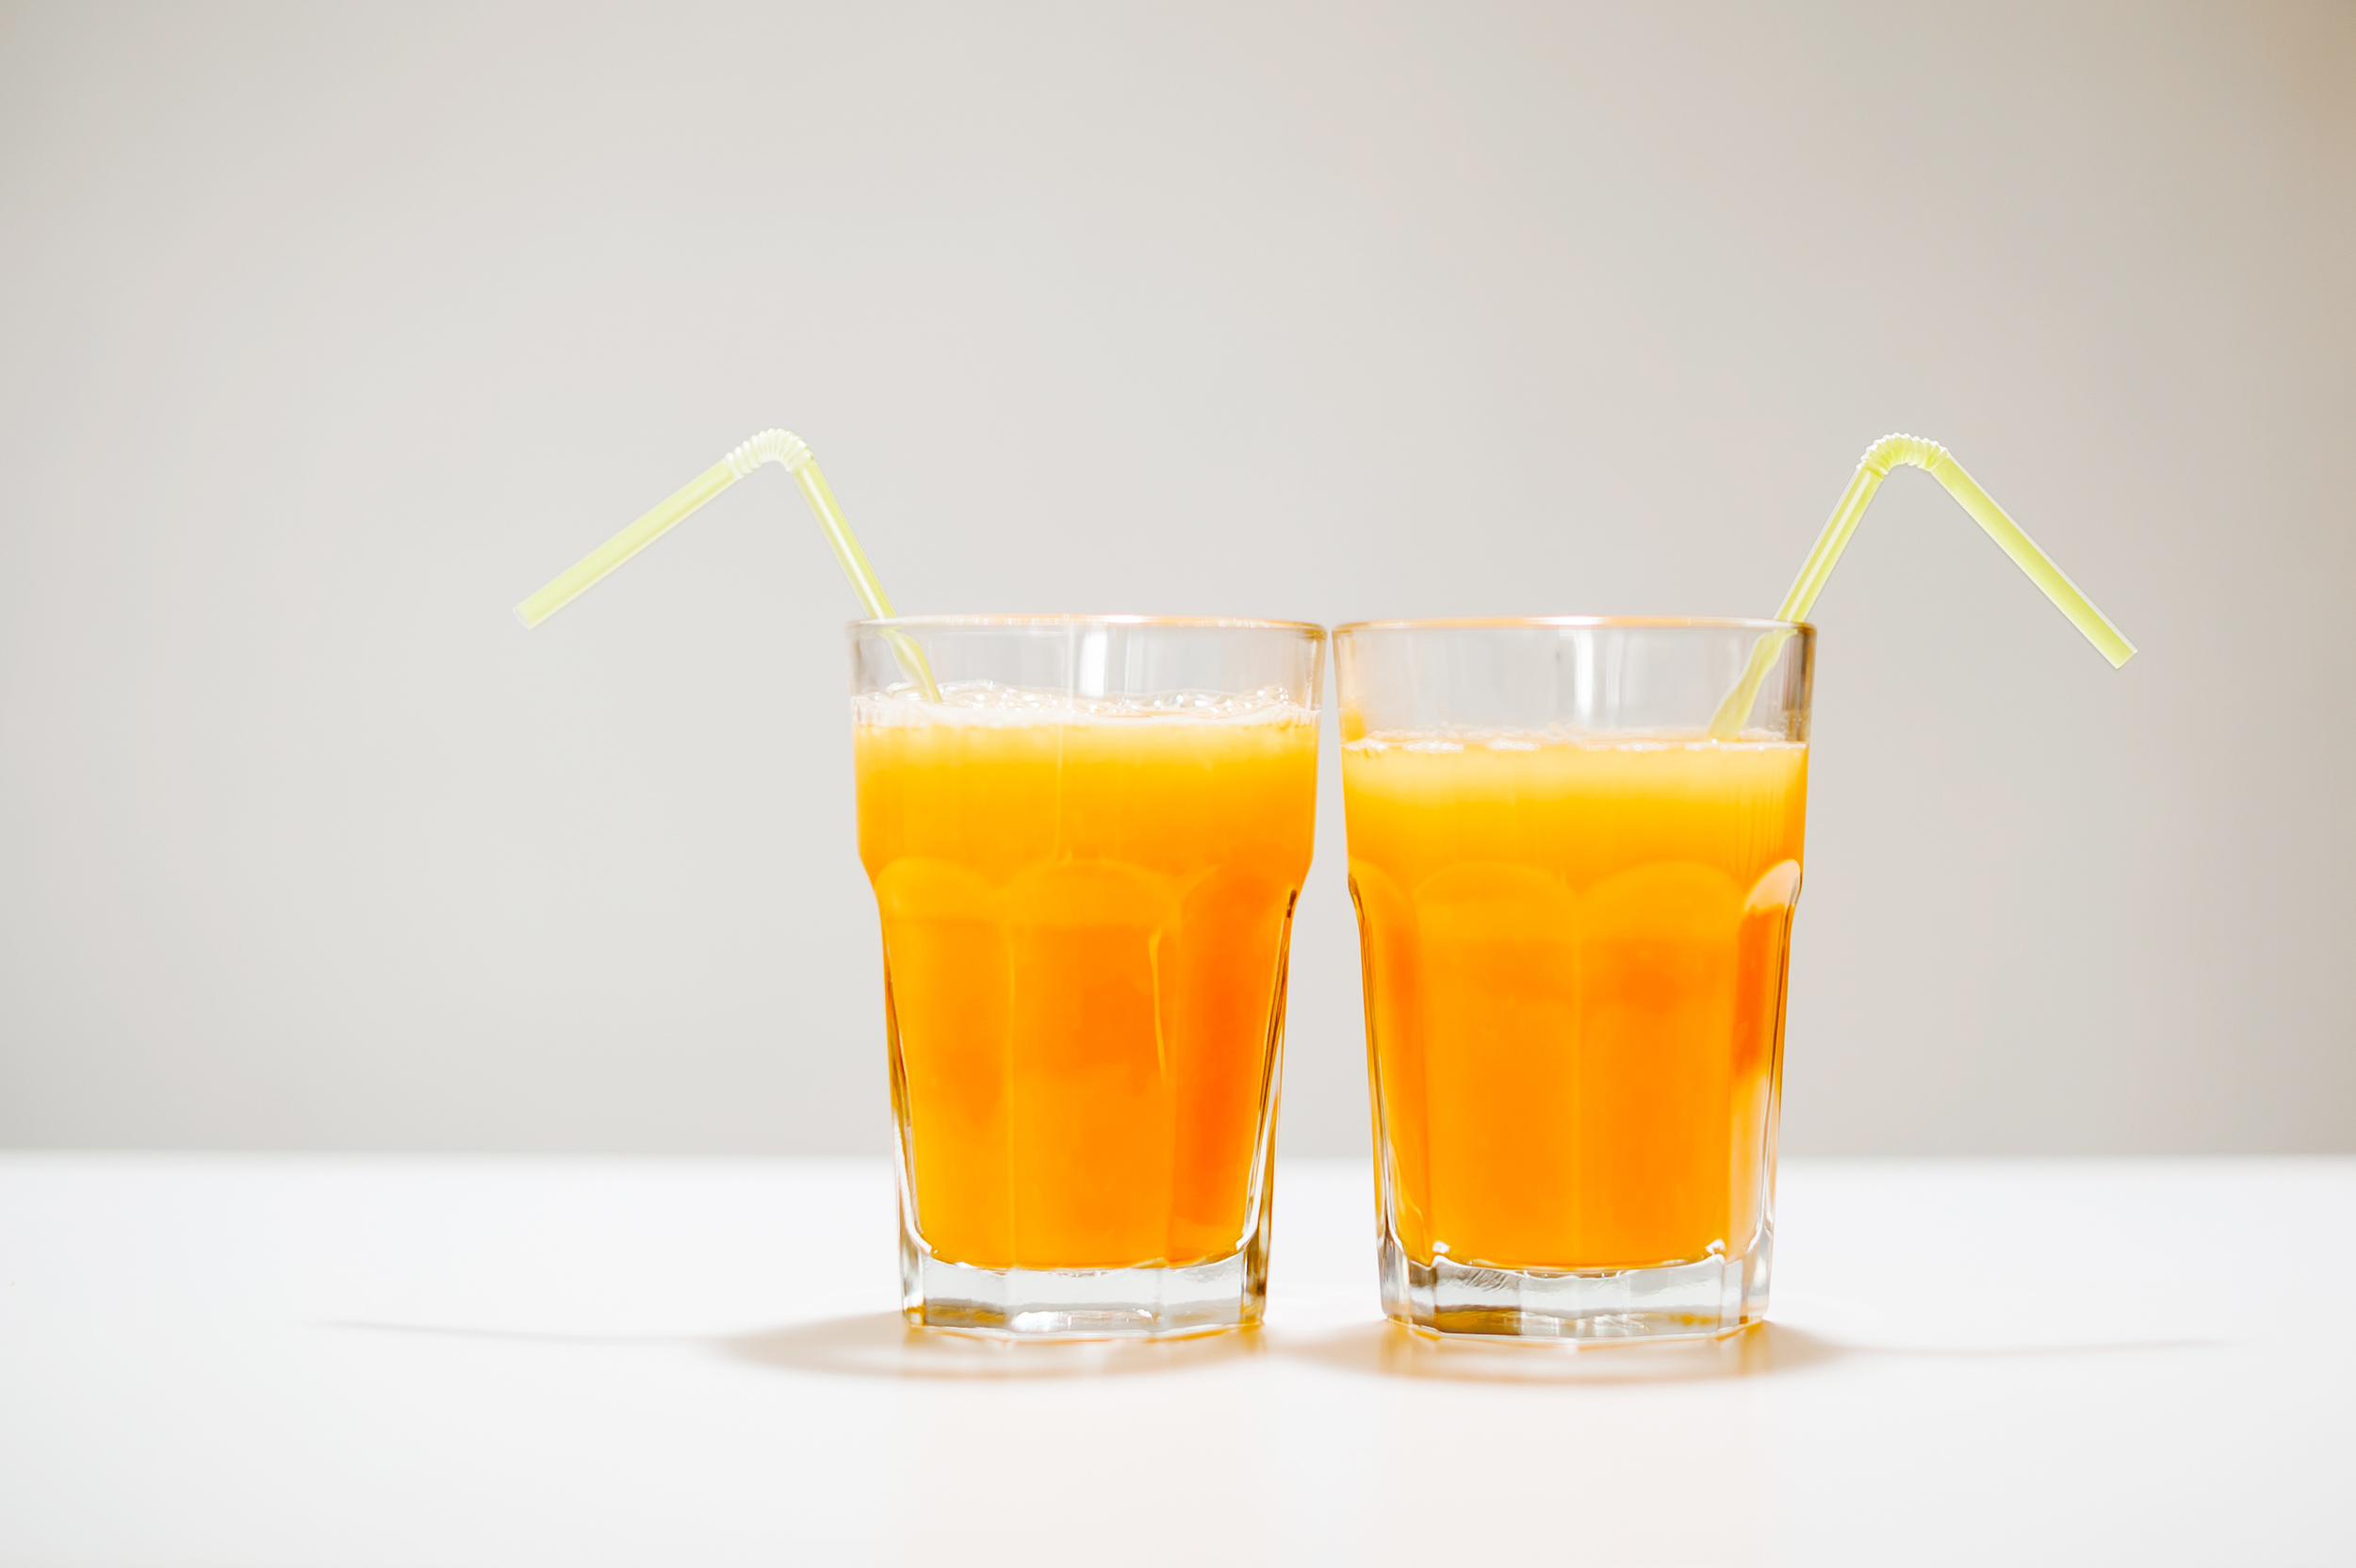 Two glass of orange juice with straw